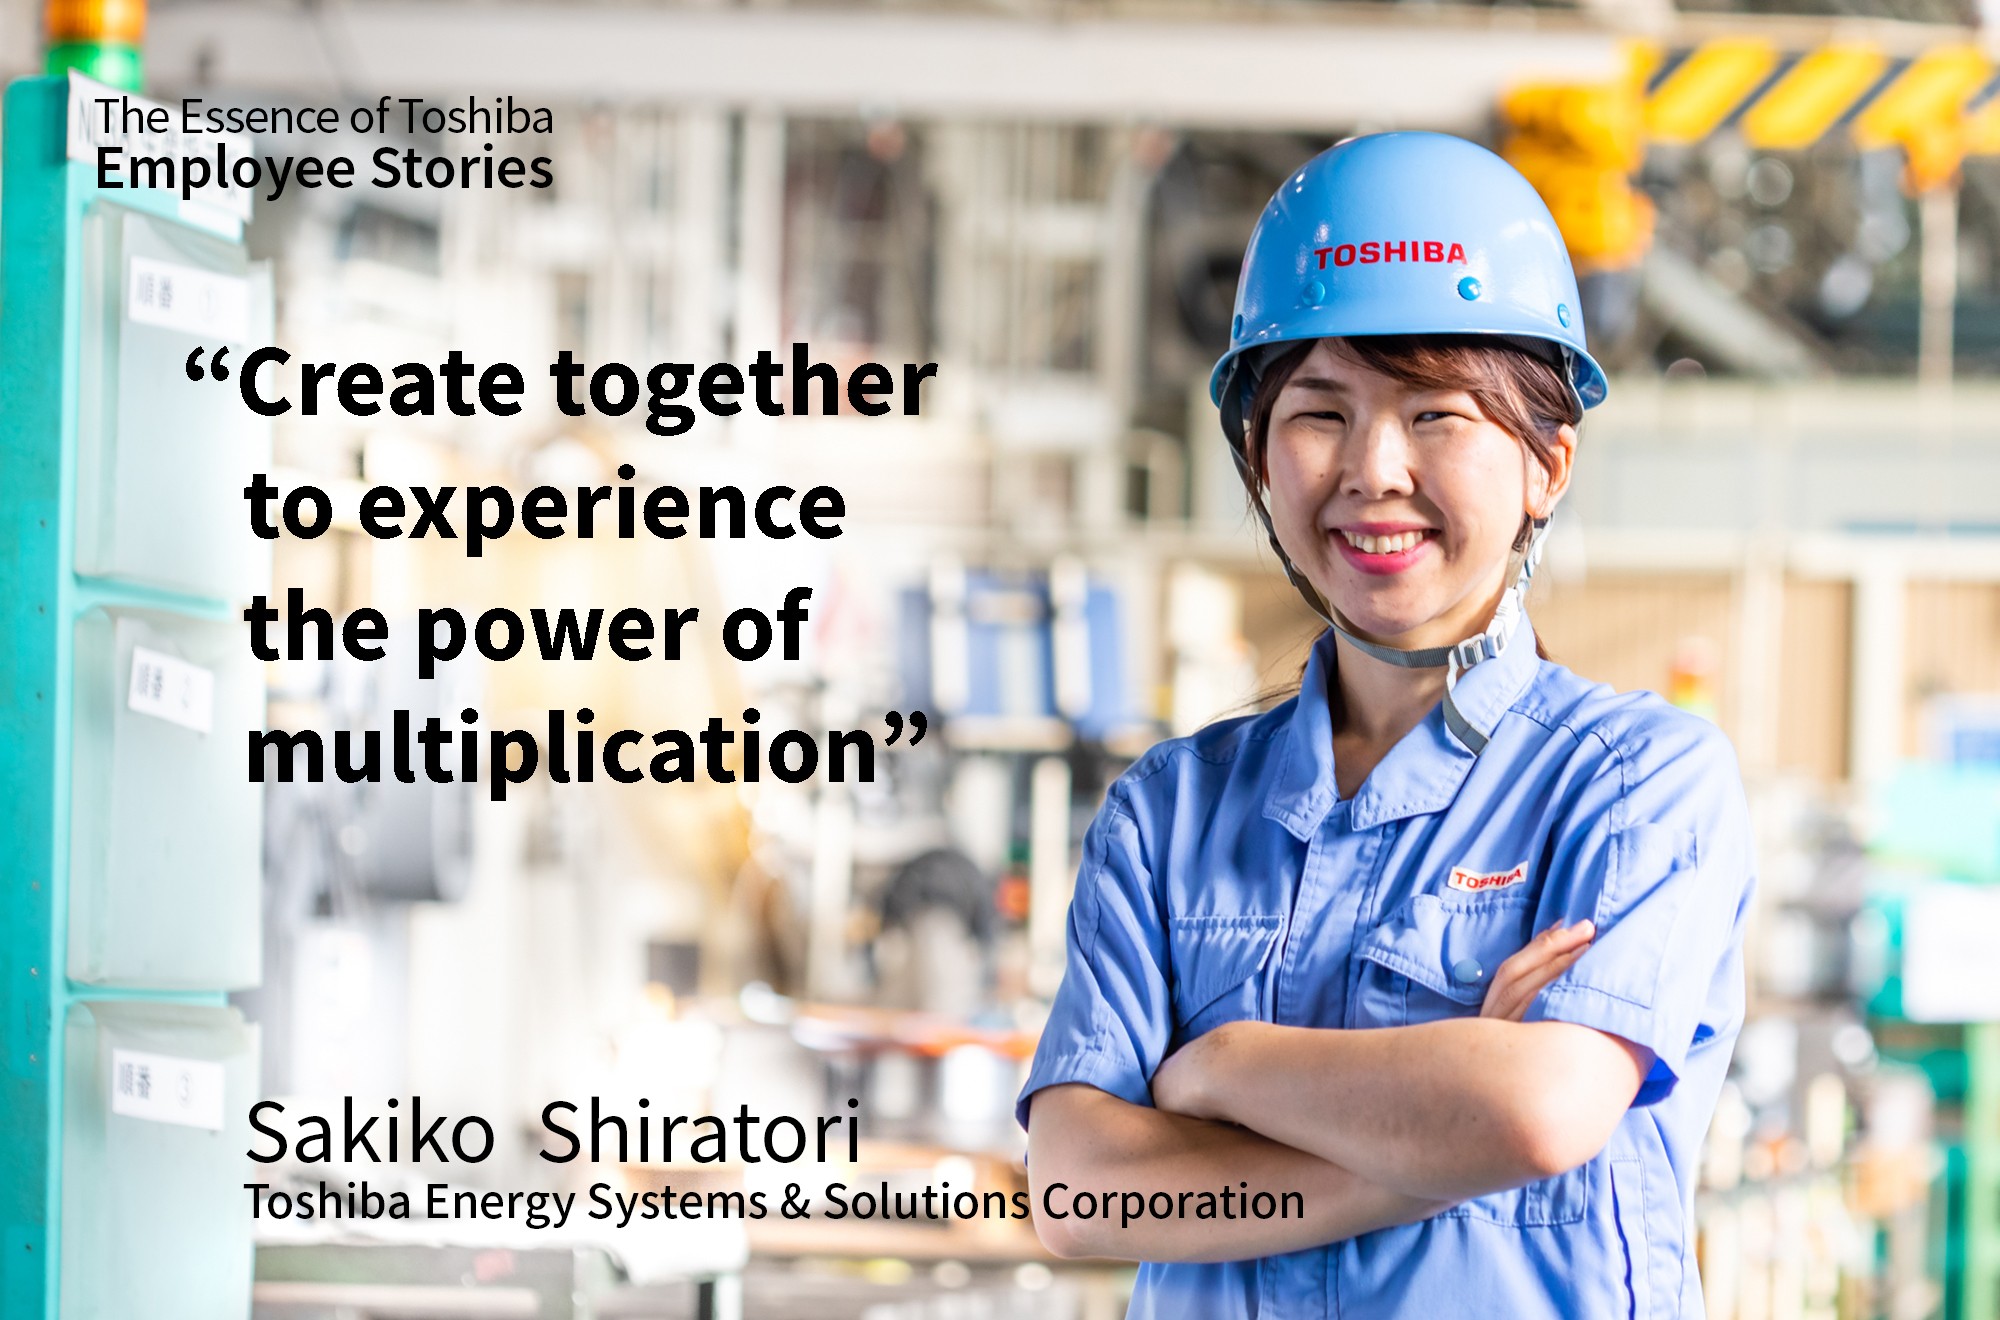 Toshiba Energy Systems & Solutions Corporation: Sakiko Shiratori